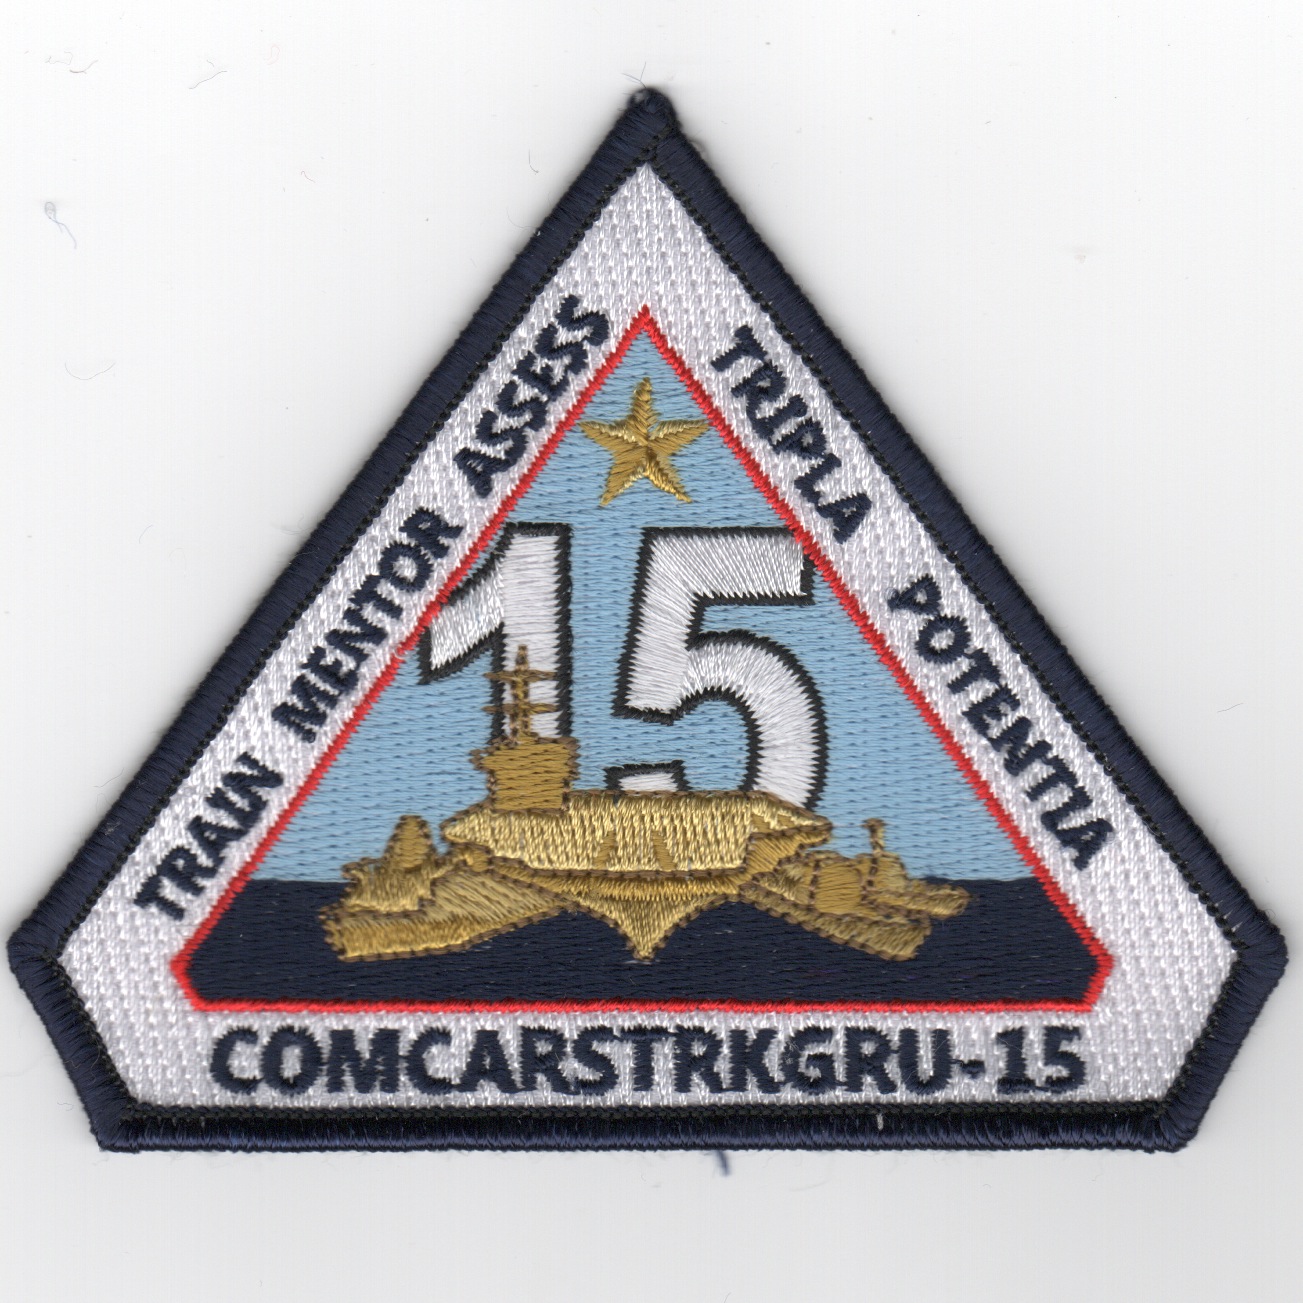 COMCARSTRKGRU-15 Patch